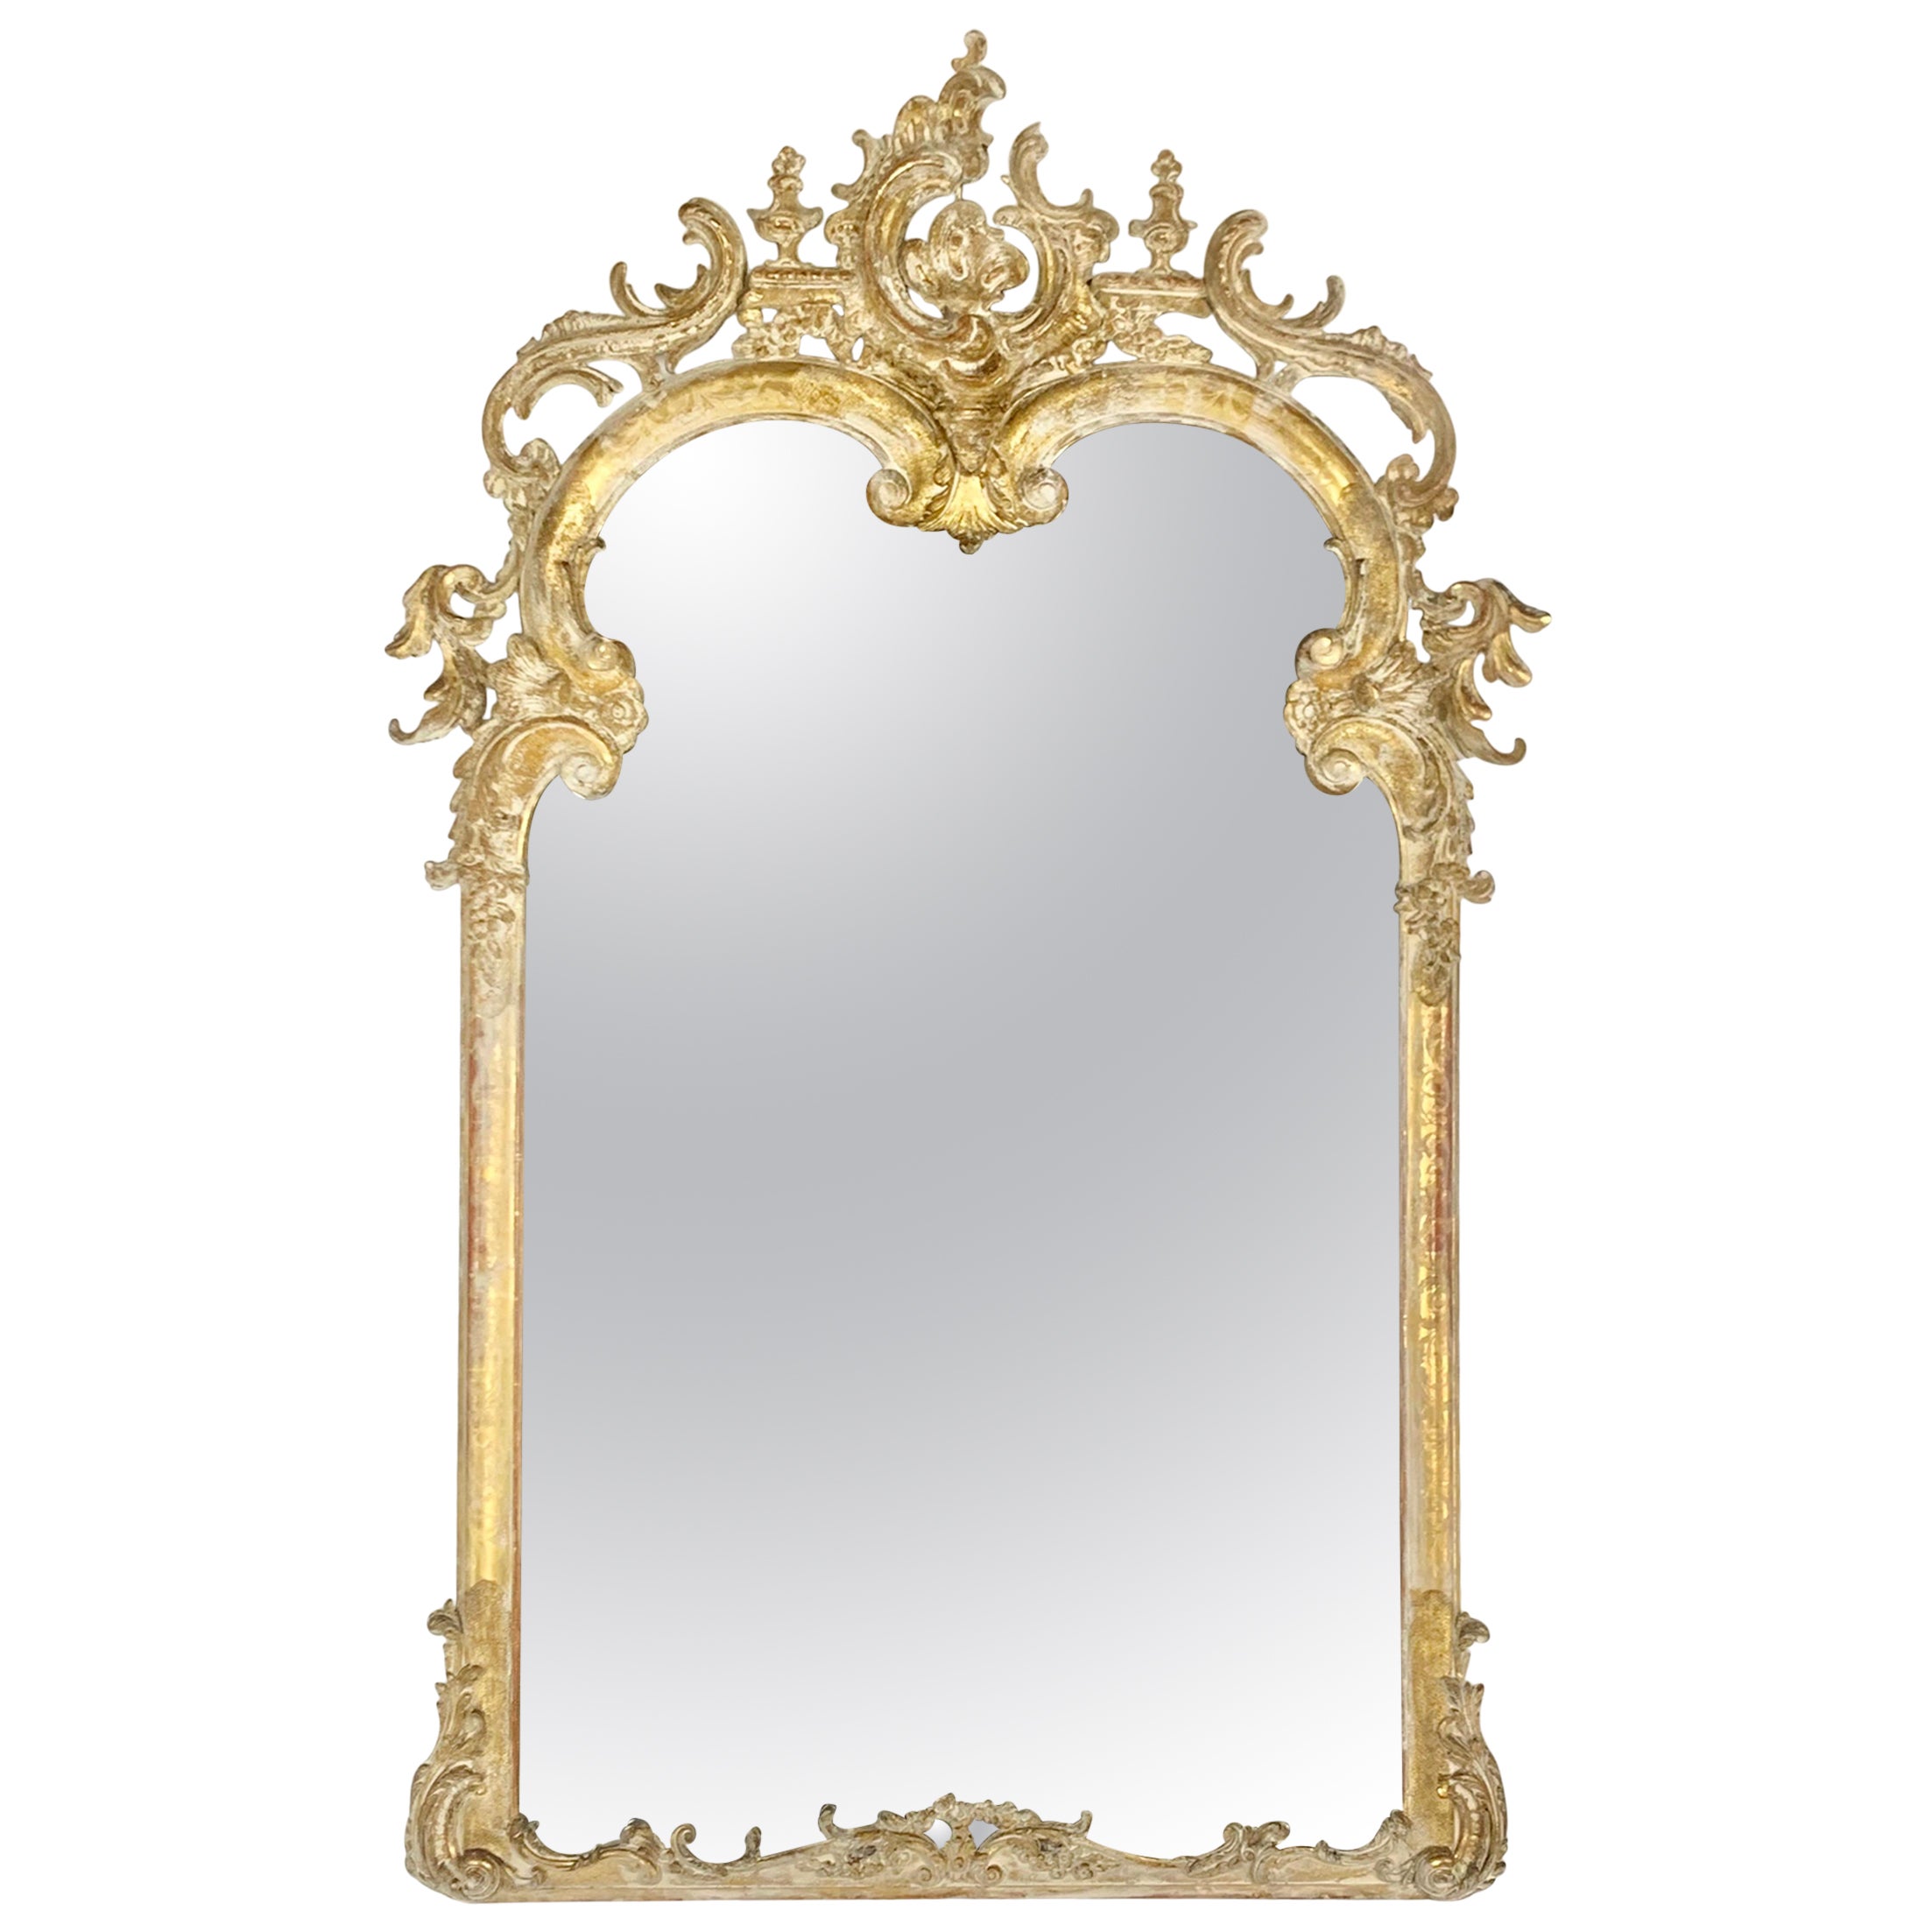 19th C. Monumental Sized French Gilt Wood Rococo Style Mirror